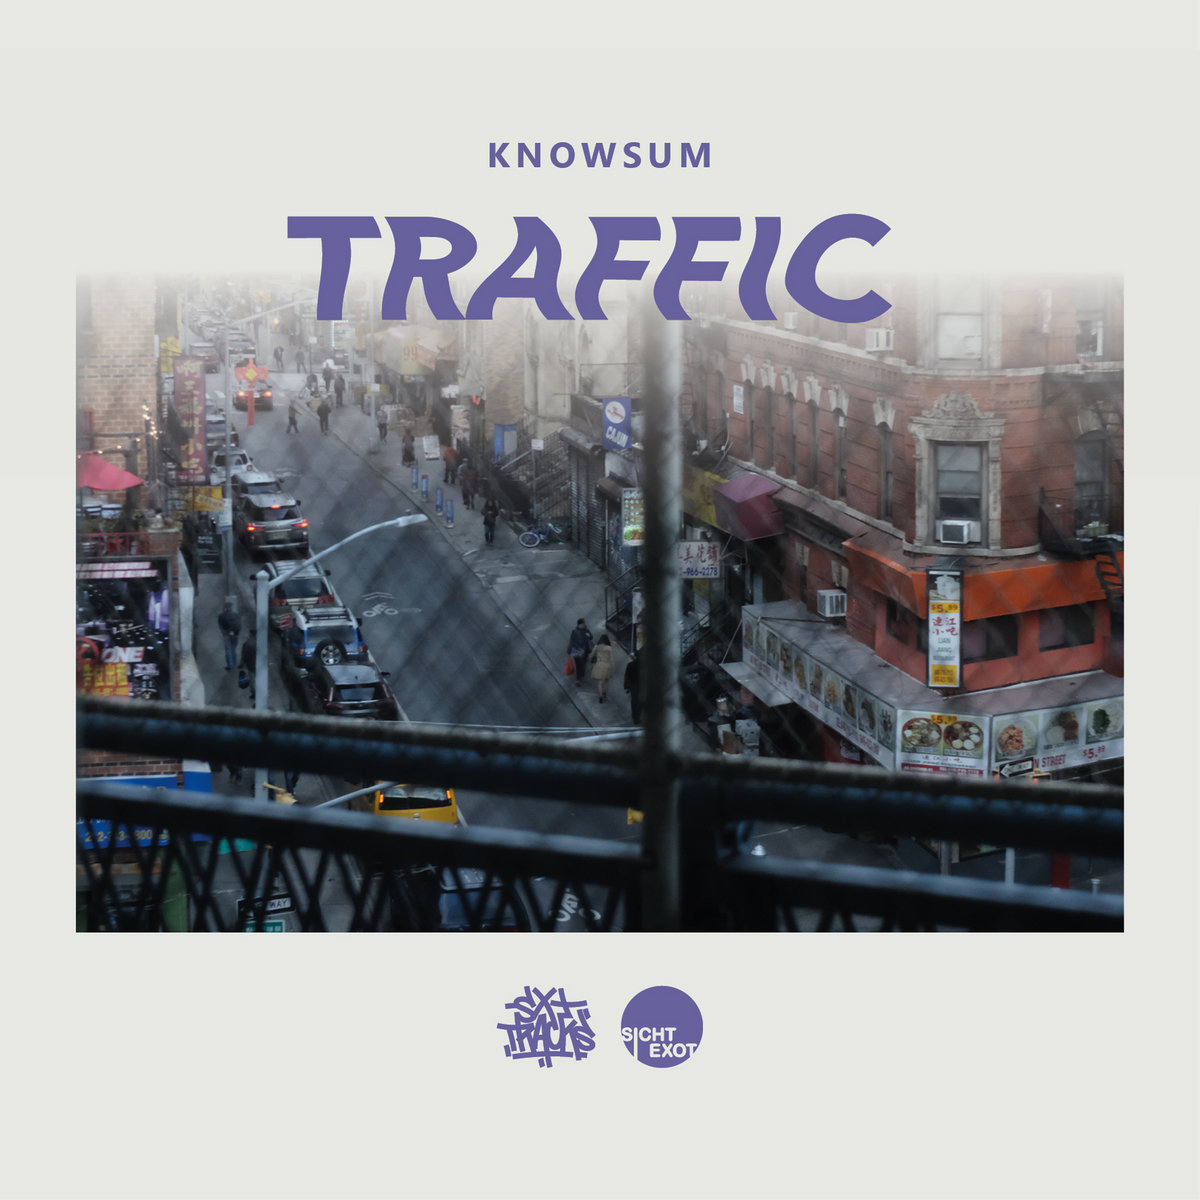 Traffic_knowsum